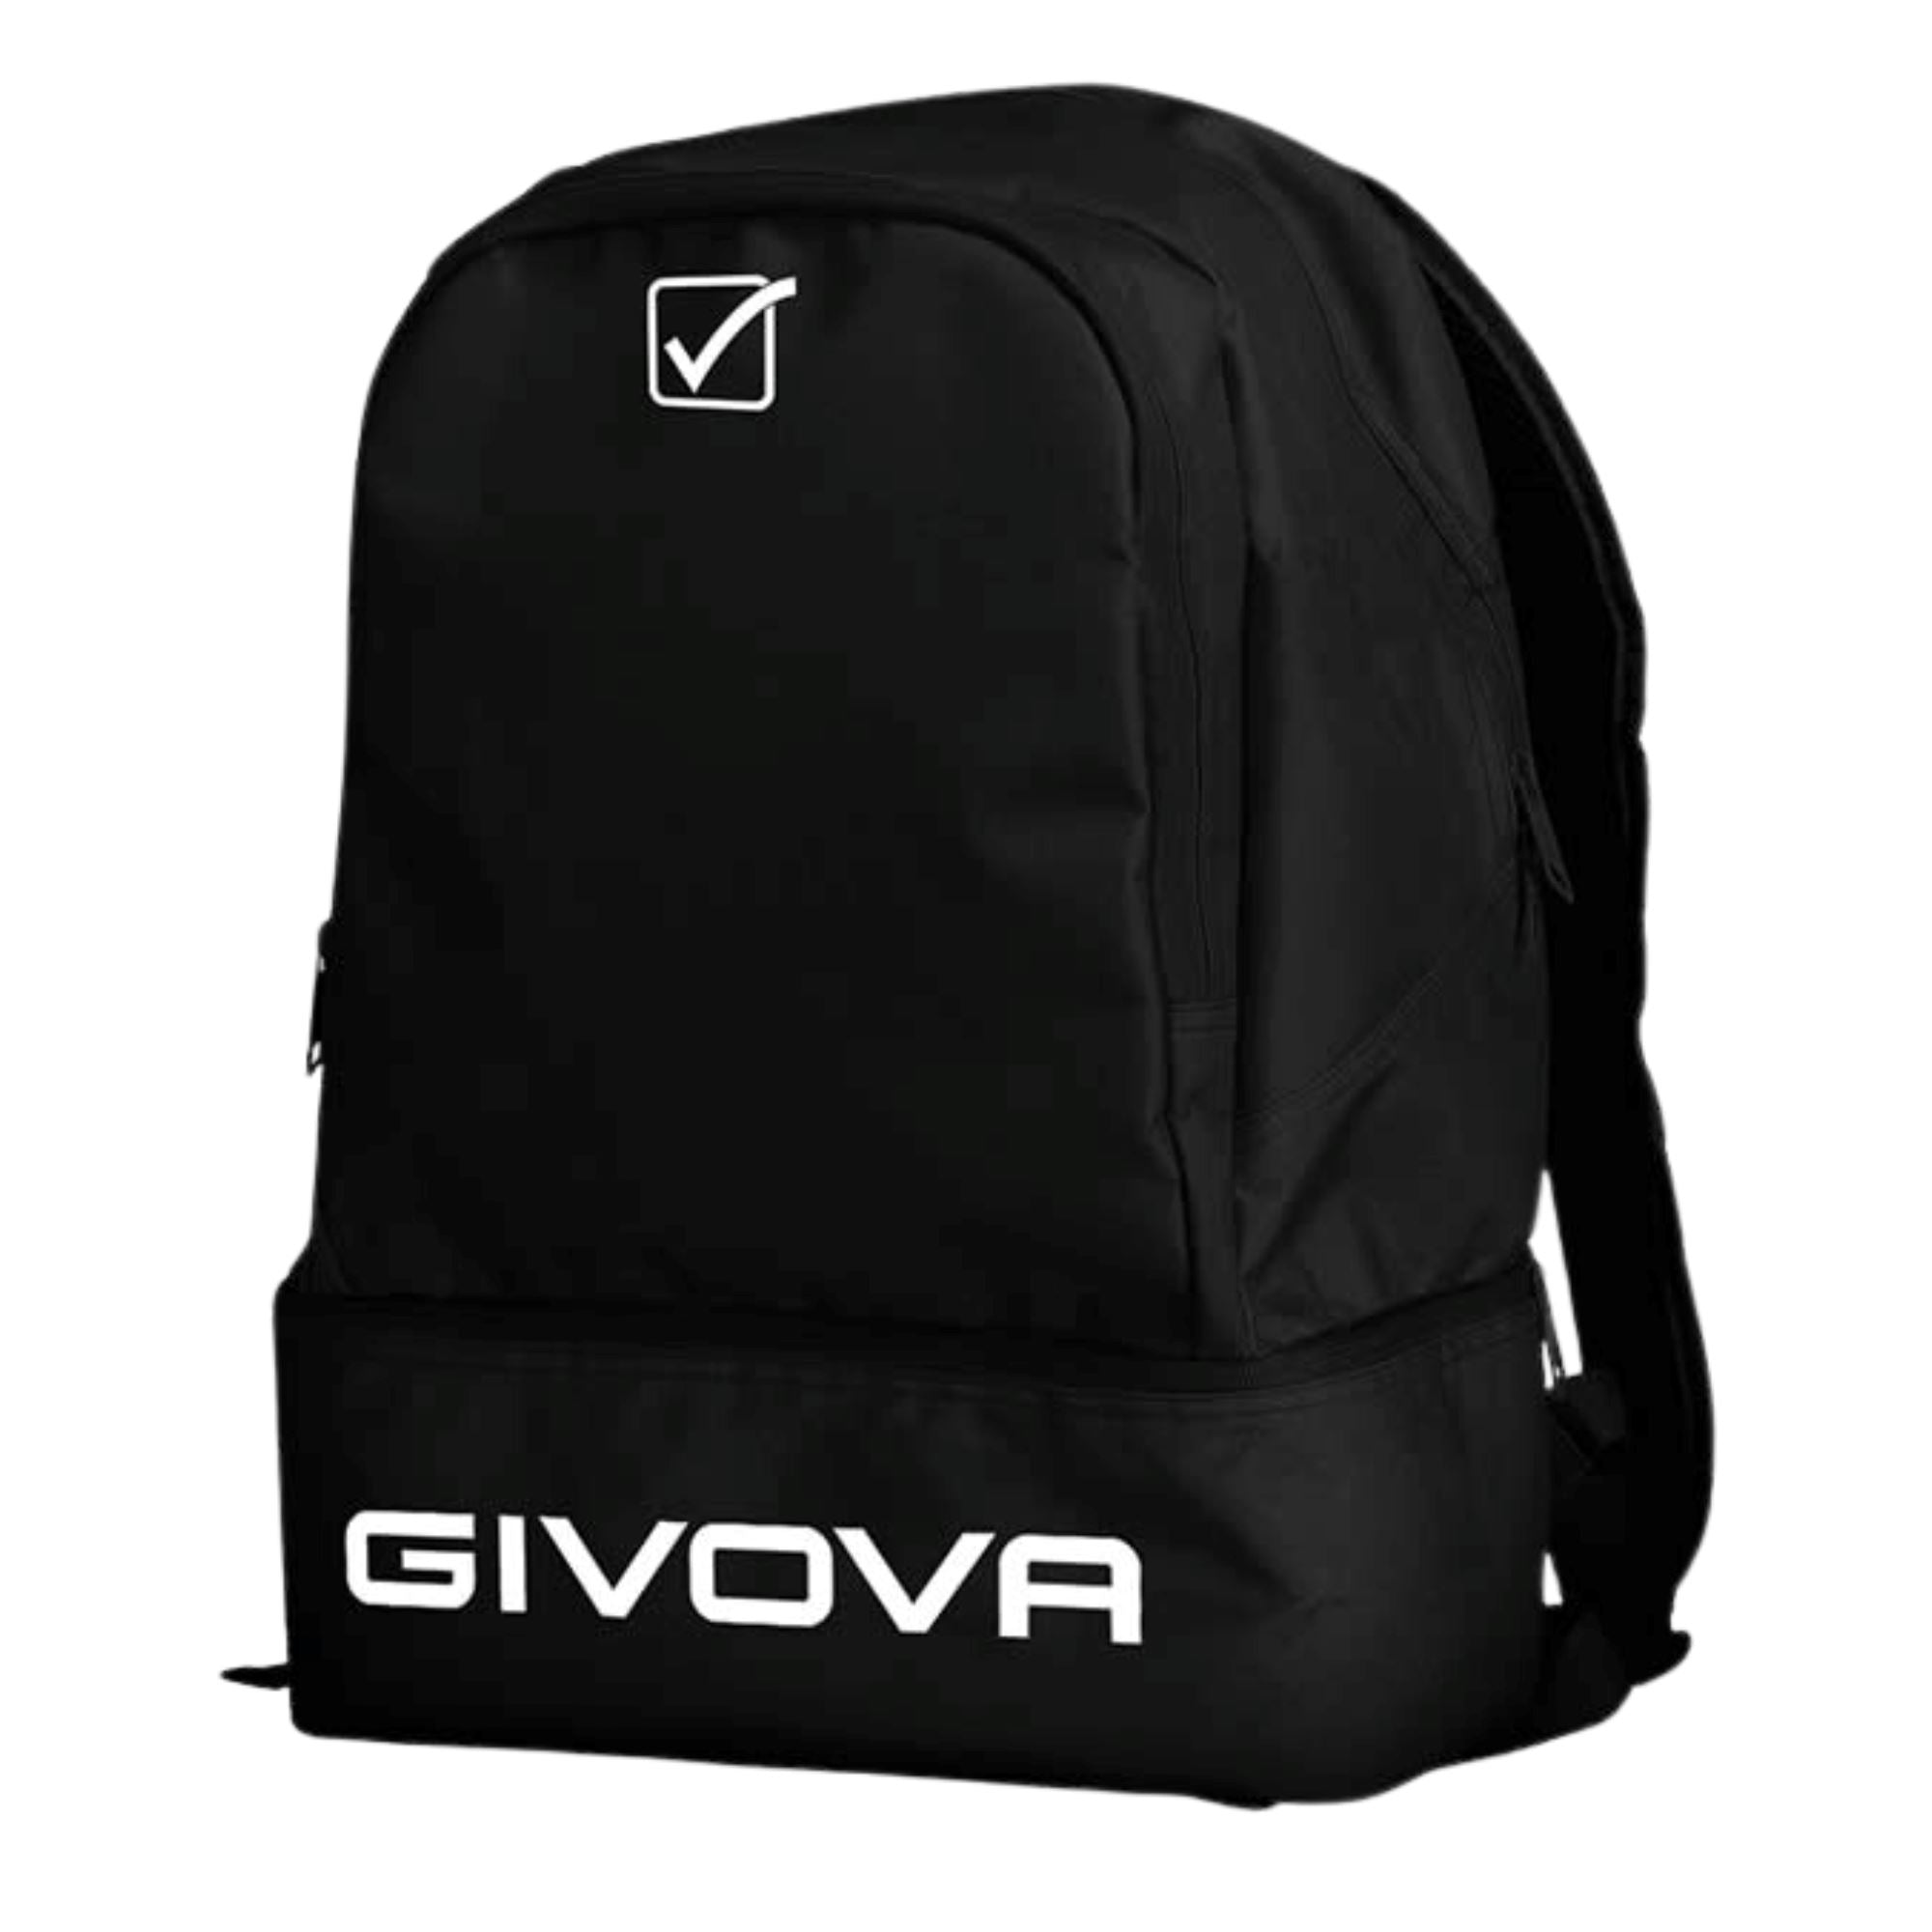 Givova Europa Backpack - GIVOVA